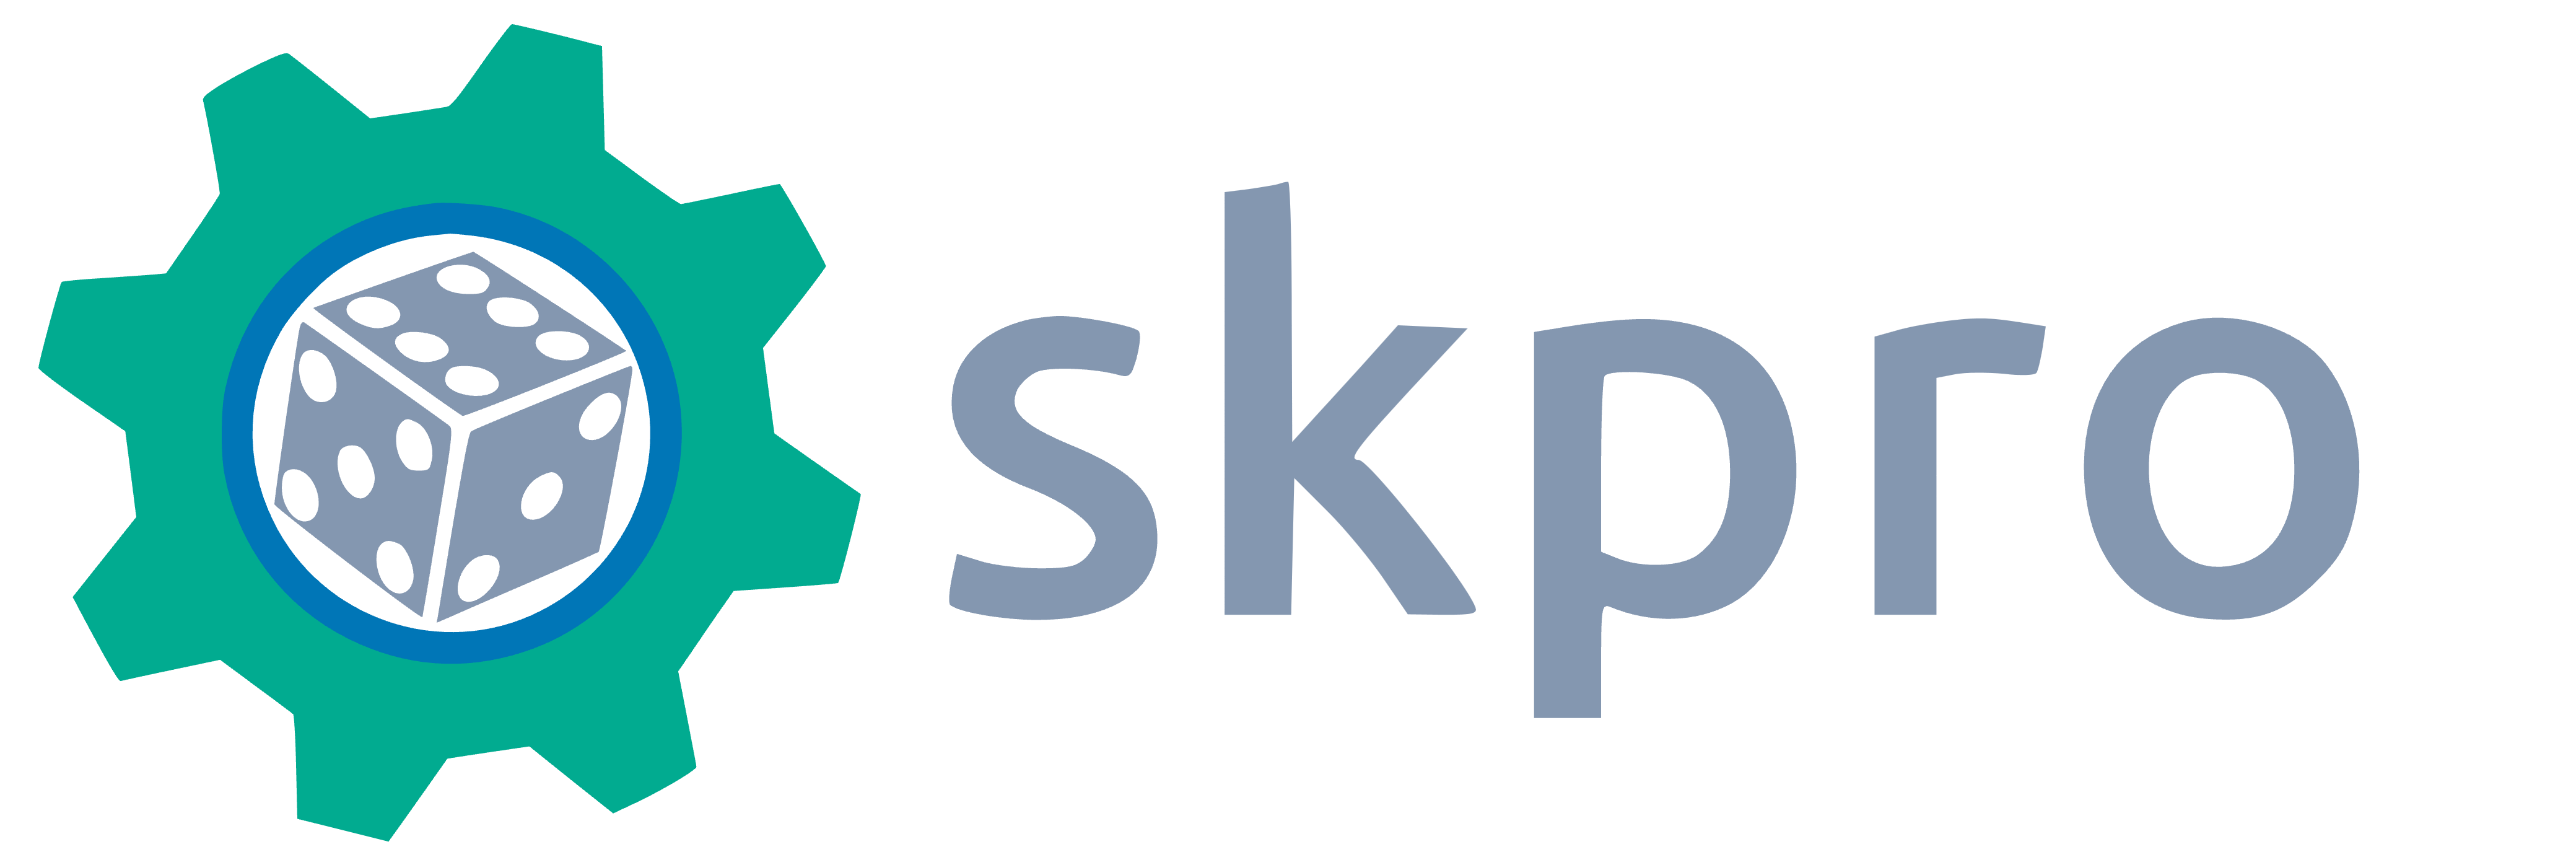 skpro 2.3.0 documentation - Home